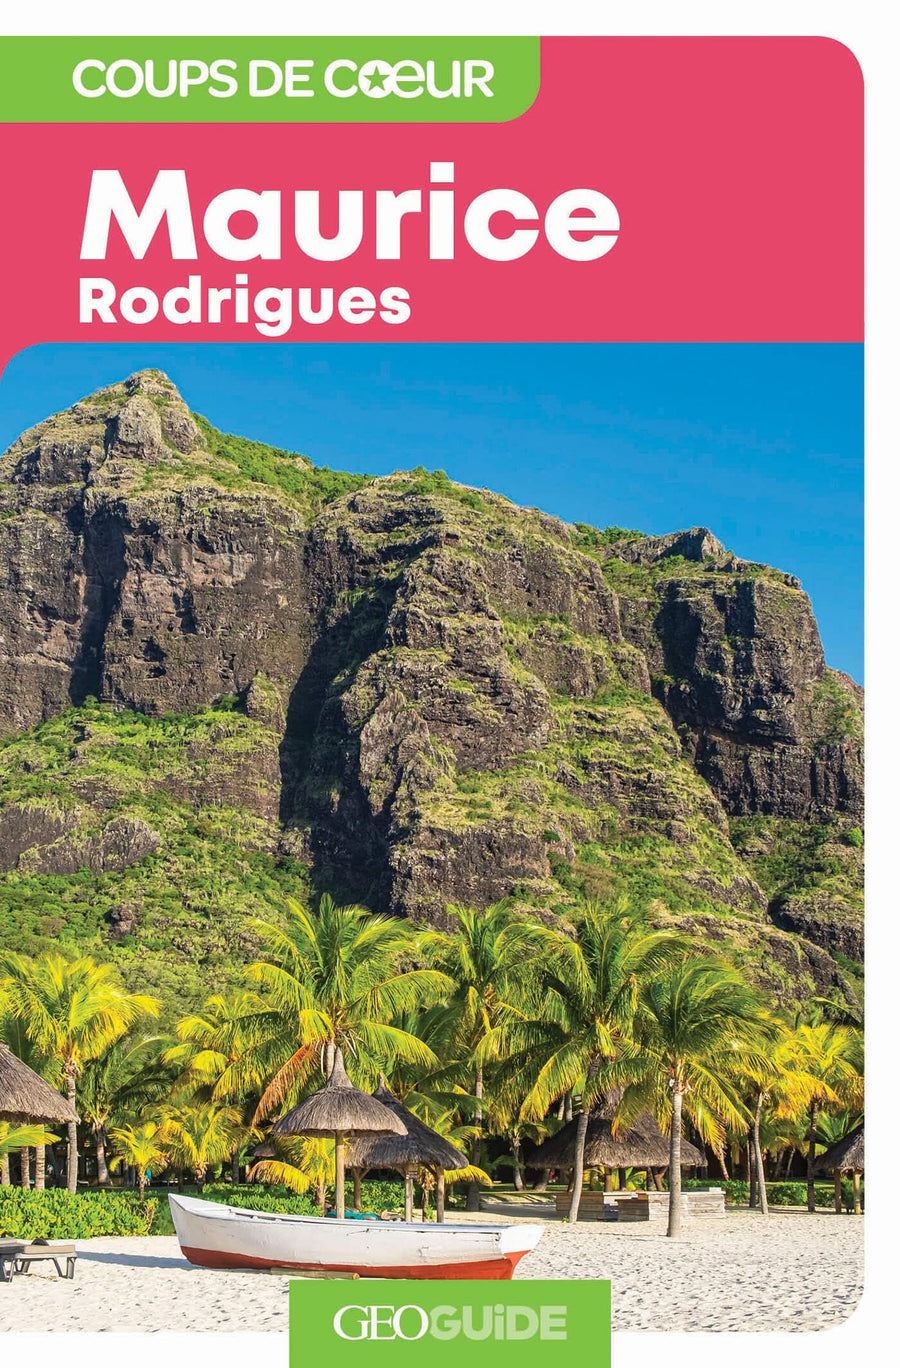 Géoguide (coups de coeur) - Maurice & Rodrigues | Gallimard guide de voyage Gallimard 